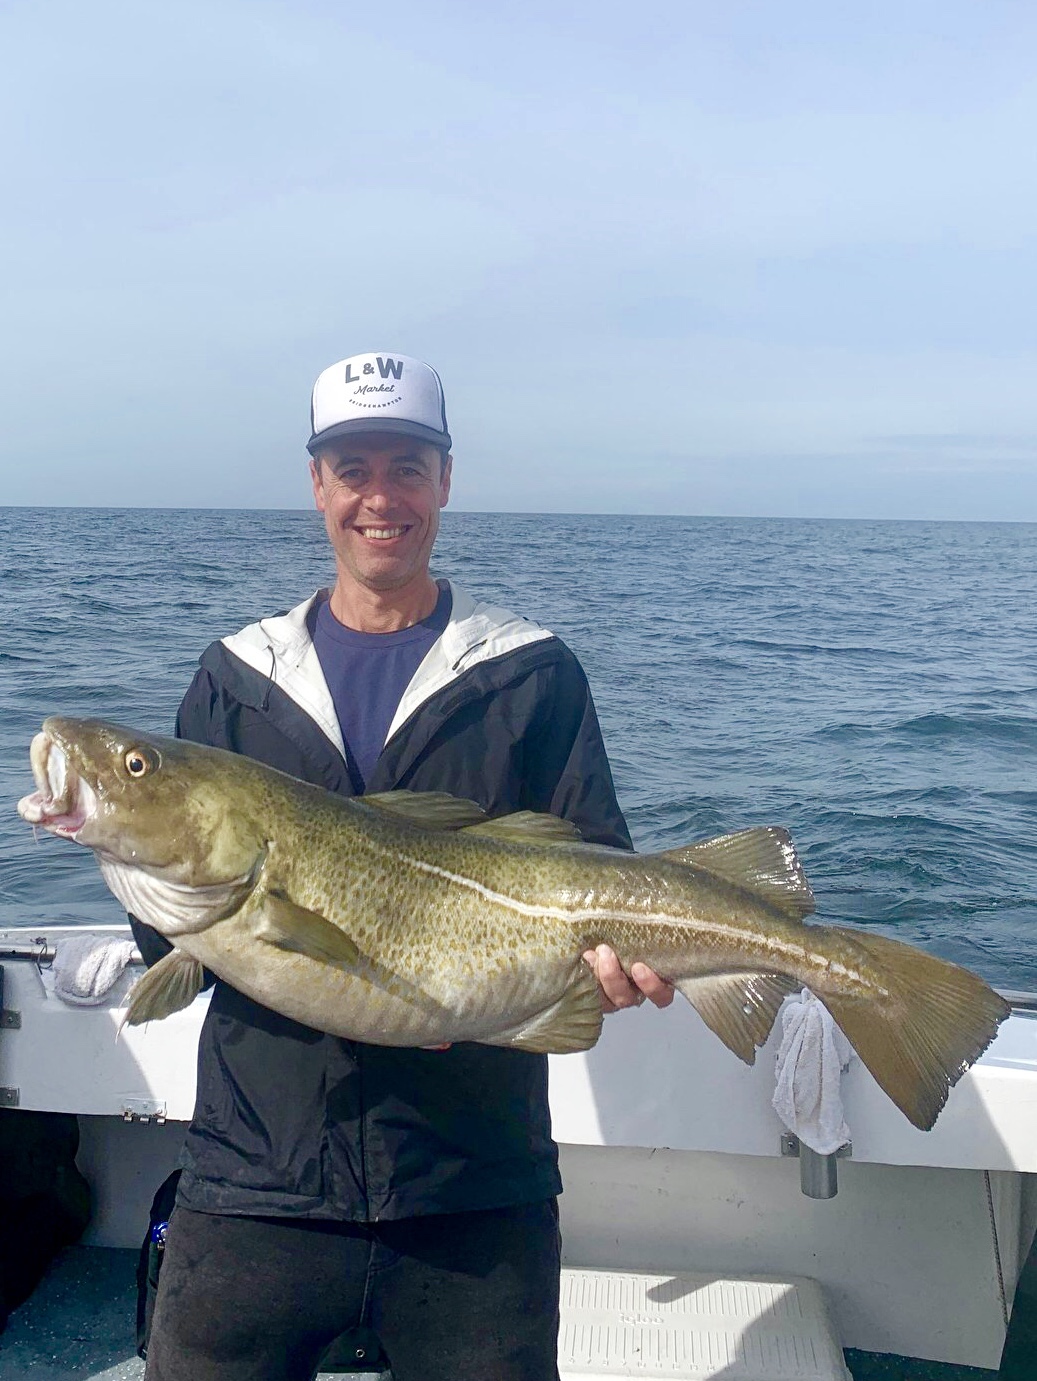 Brian Halweil decked this whopper cod while fishing aboard the Shinnecock Star off Hampton Bays last week.